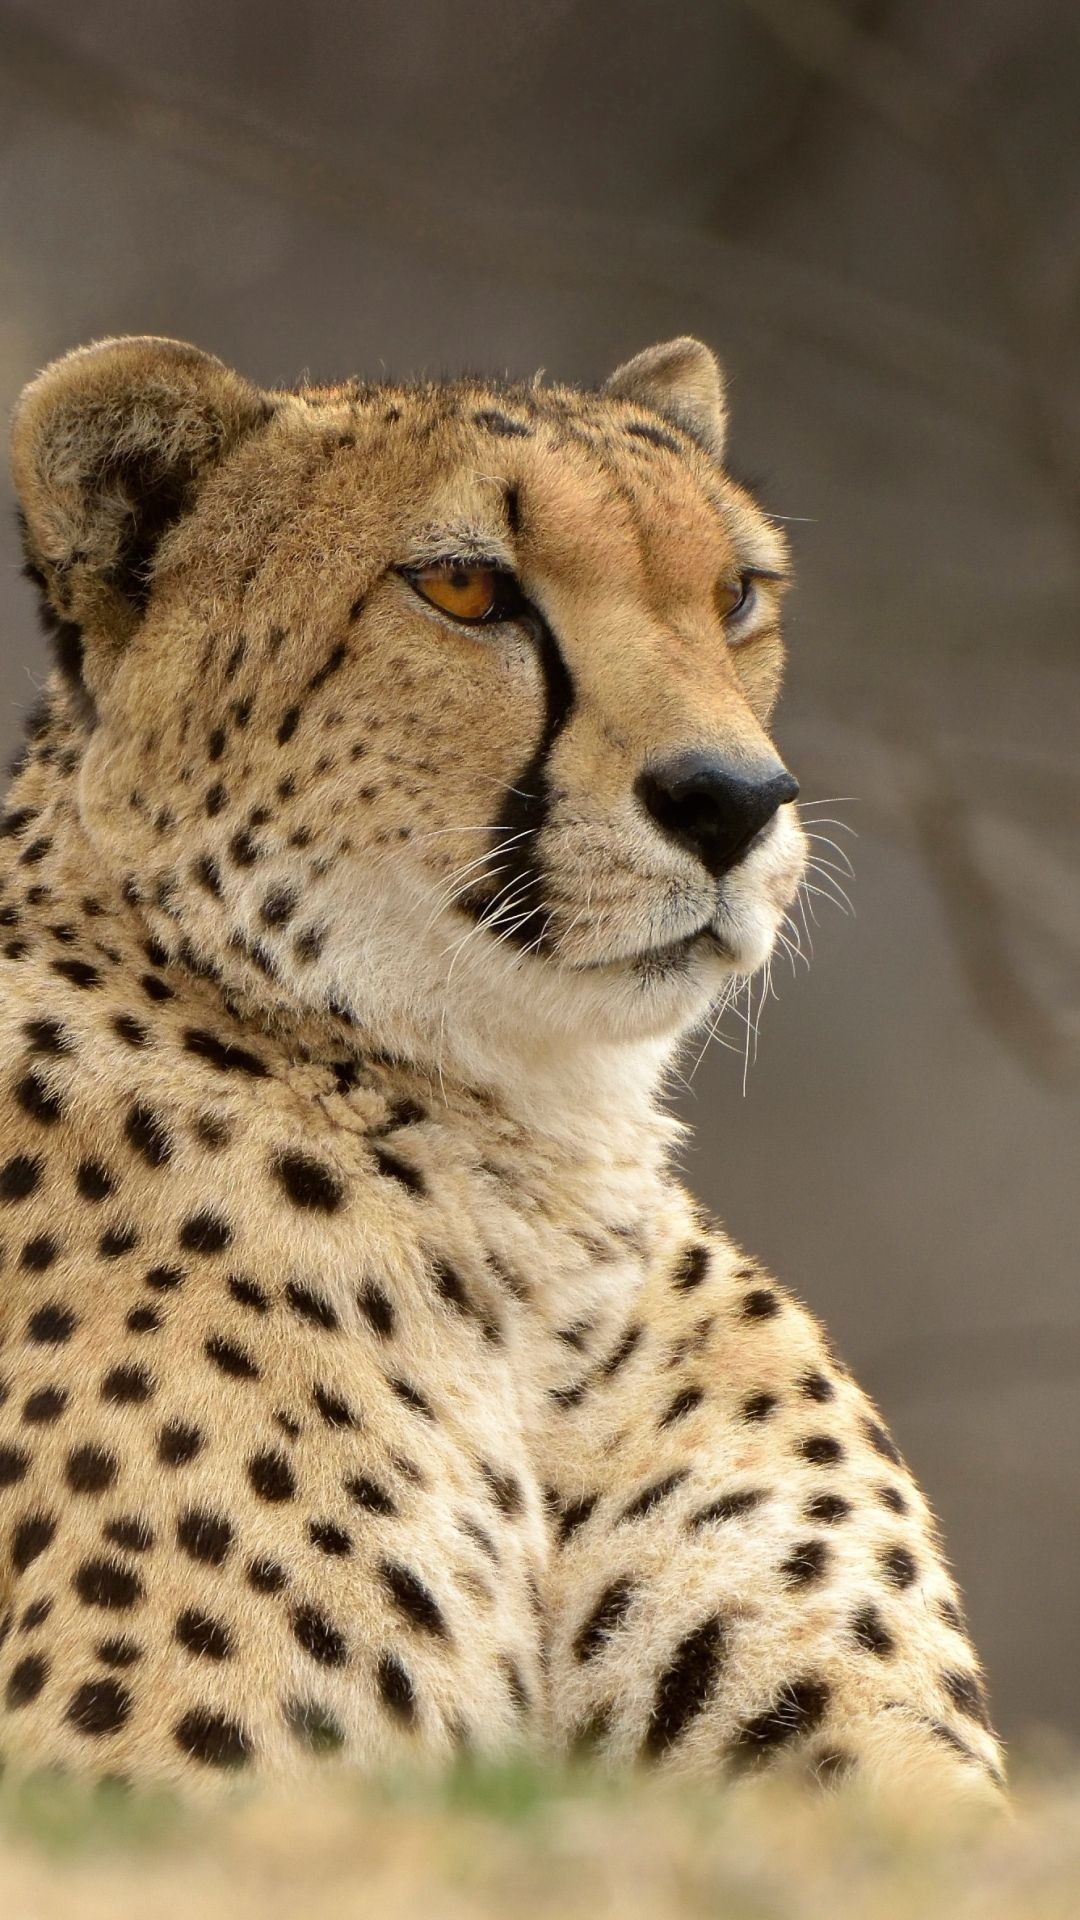 Animal cheetah, Mobile wallpaper, Cute and wild, Beautiful feline, 1080x1920 Full HD Handy